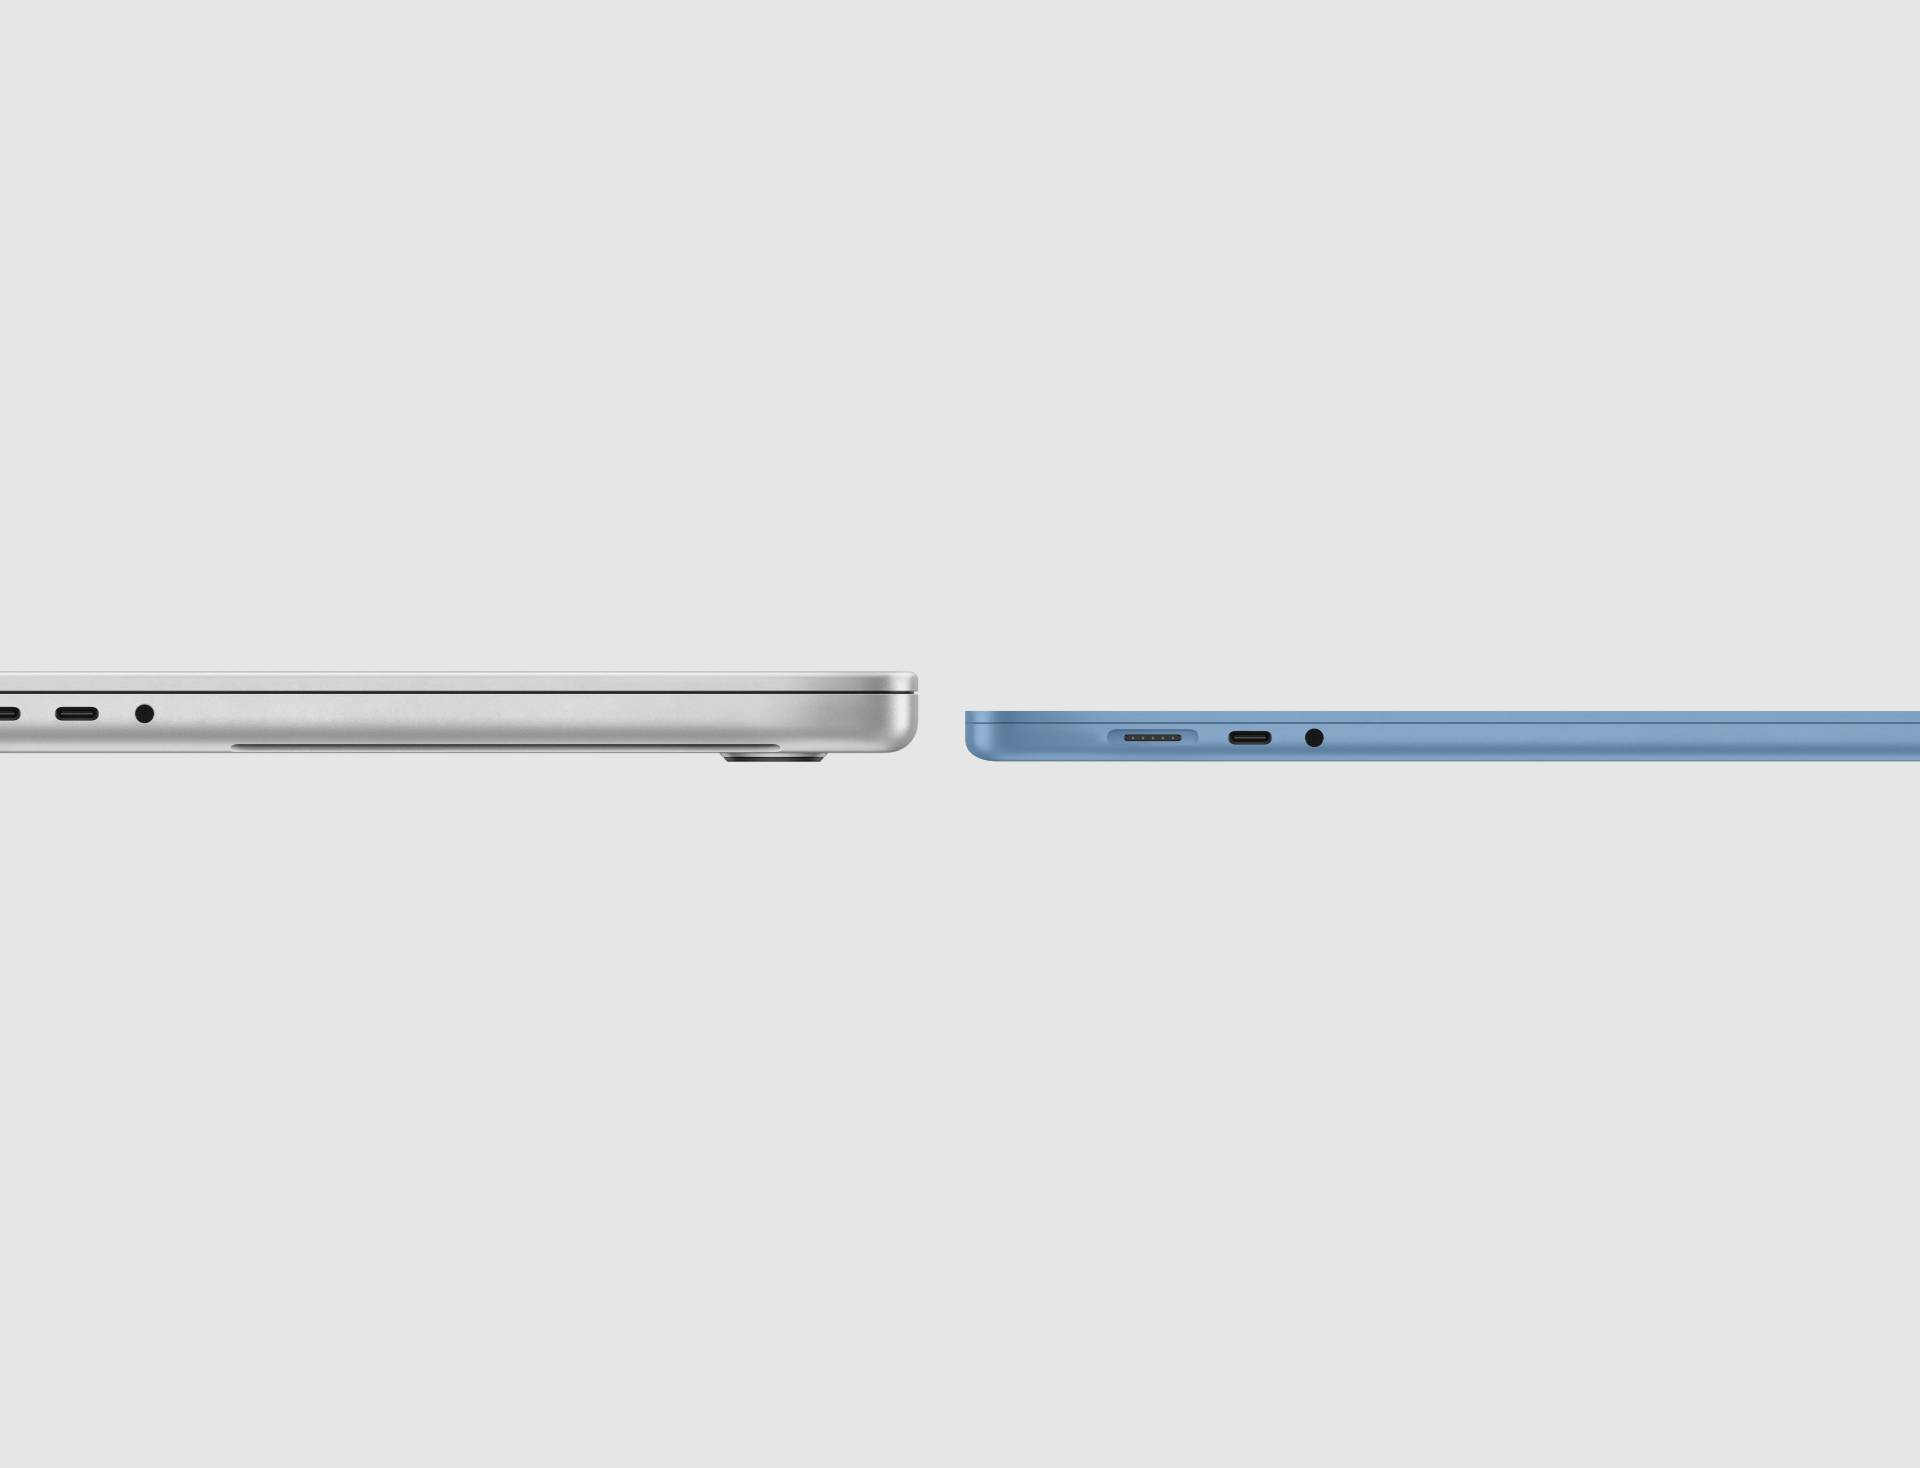 MacBook Air Concept